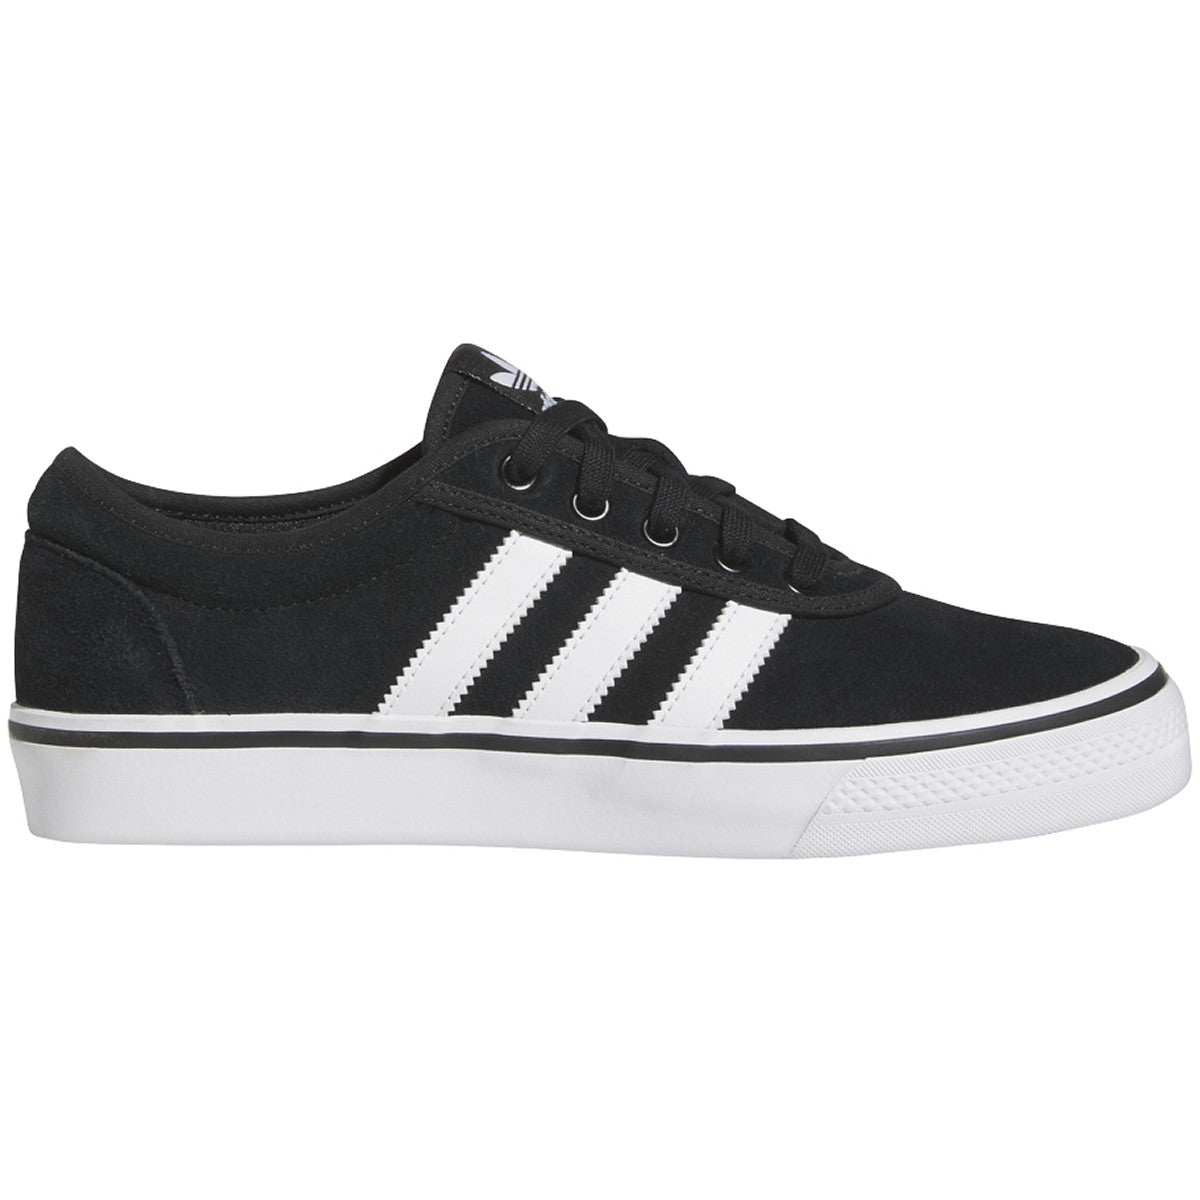 Core Black/White Adi Ease Adidas Skateboarding Shoe